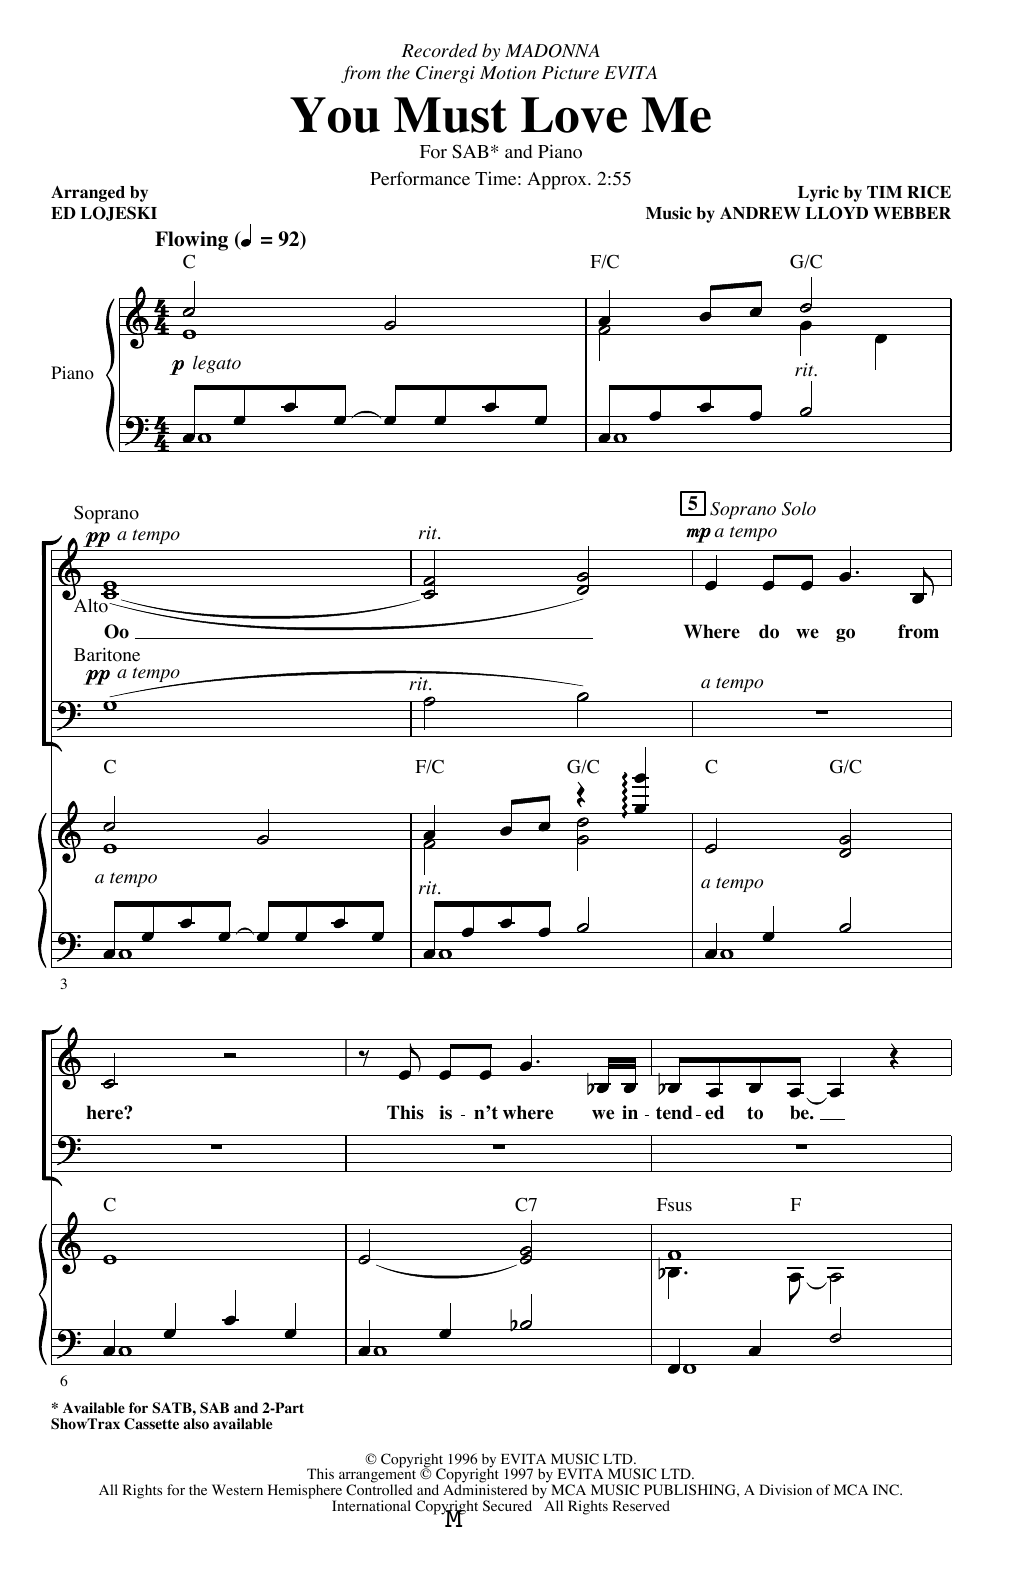 Madonna You Must Love Me (from Evita) (arr. Ed Lojeski) Sheet Music Notes & Chords for SAB Choir - Download or Print PDF